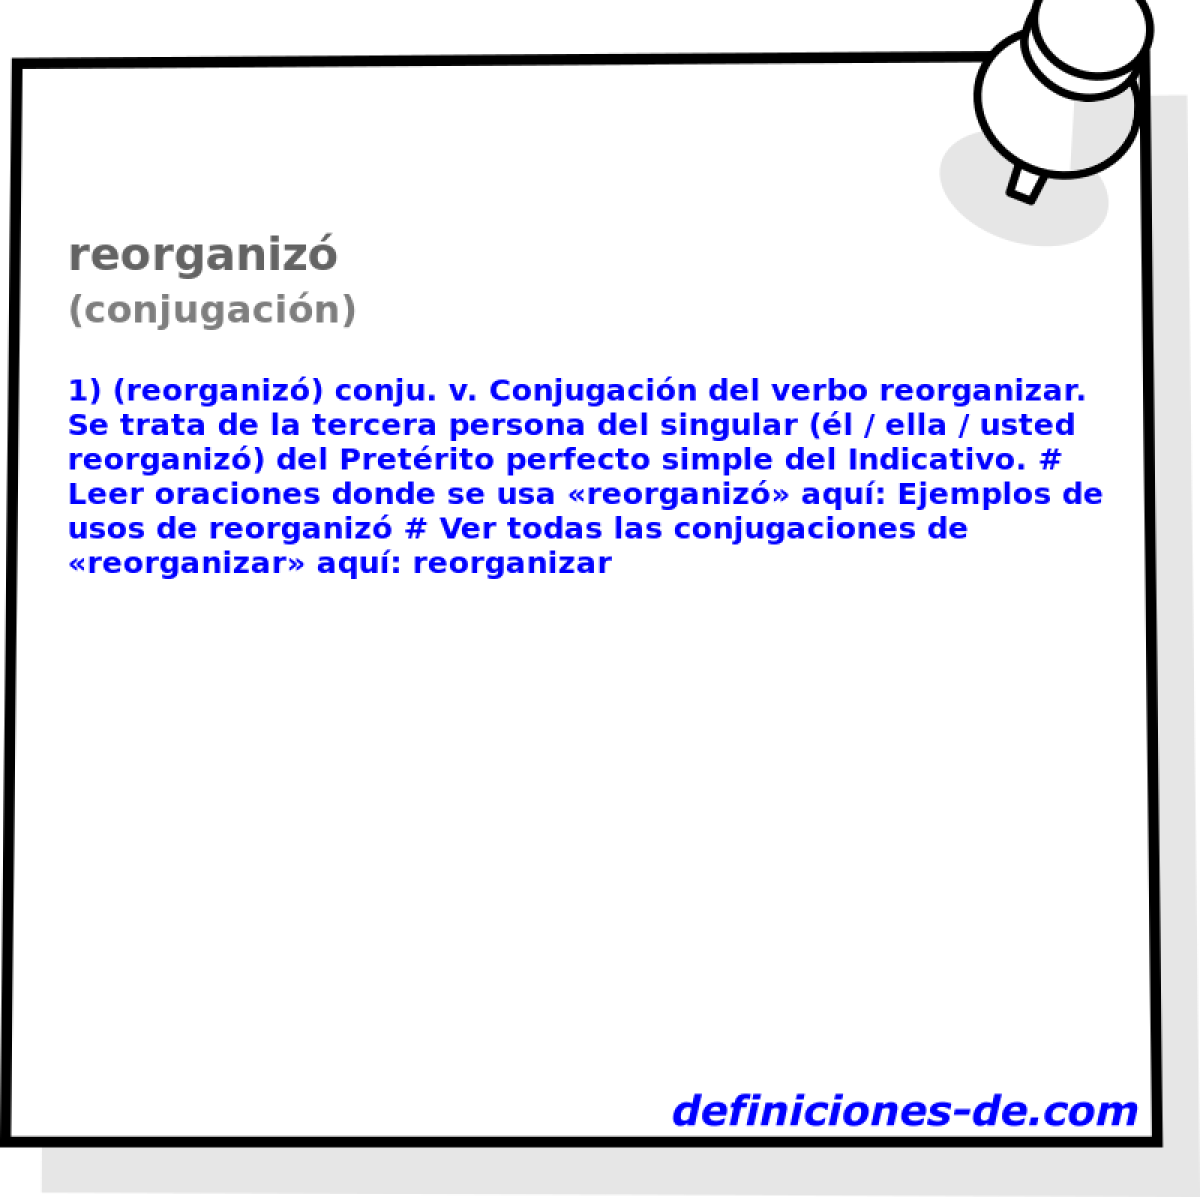 reorganiz (conjugacin)